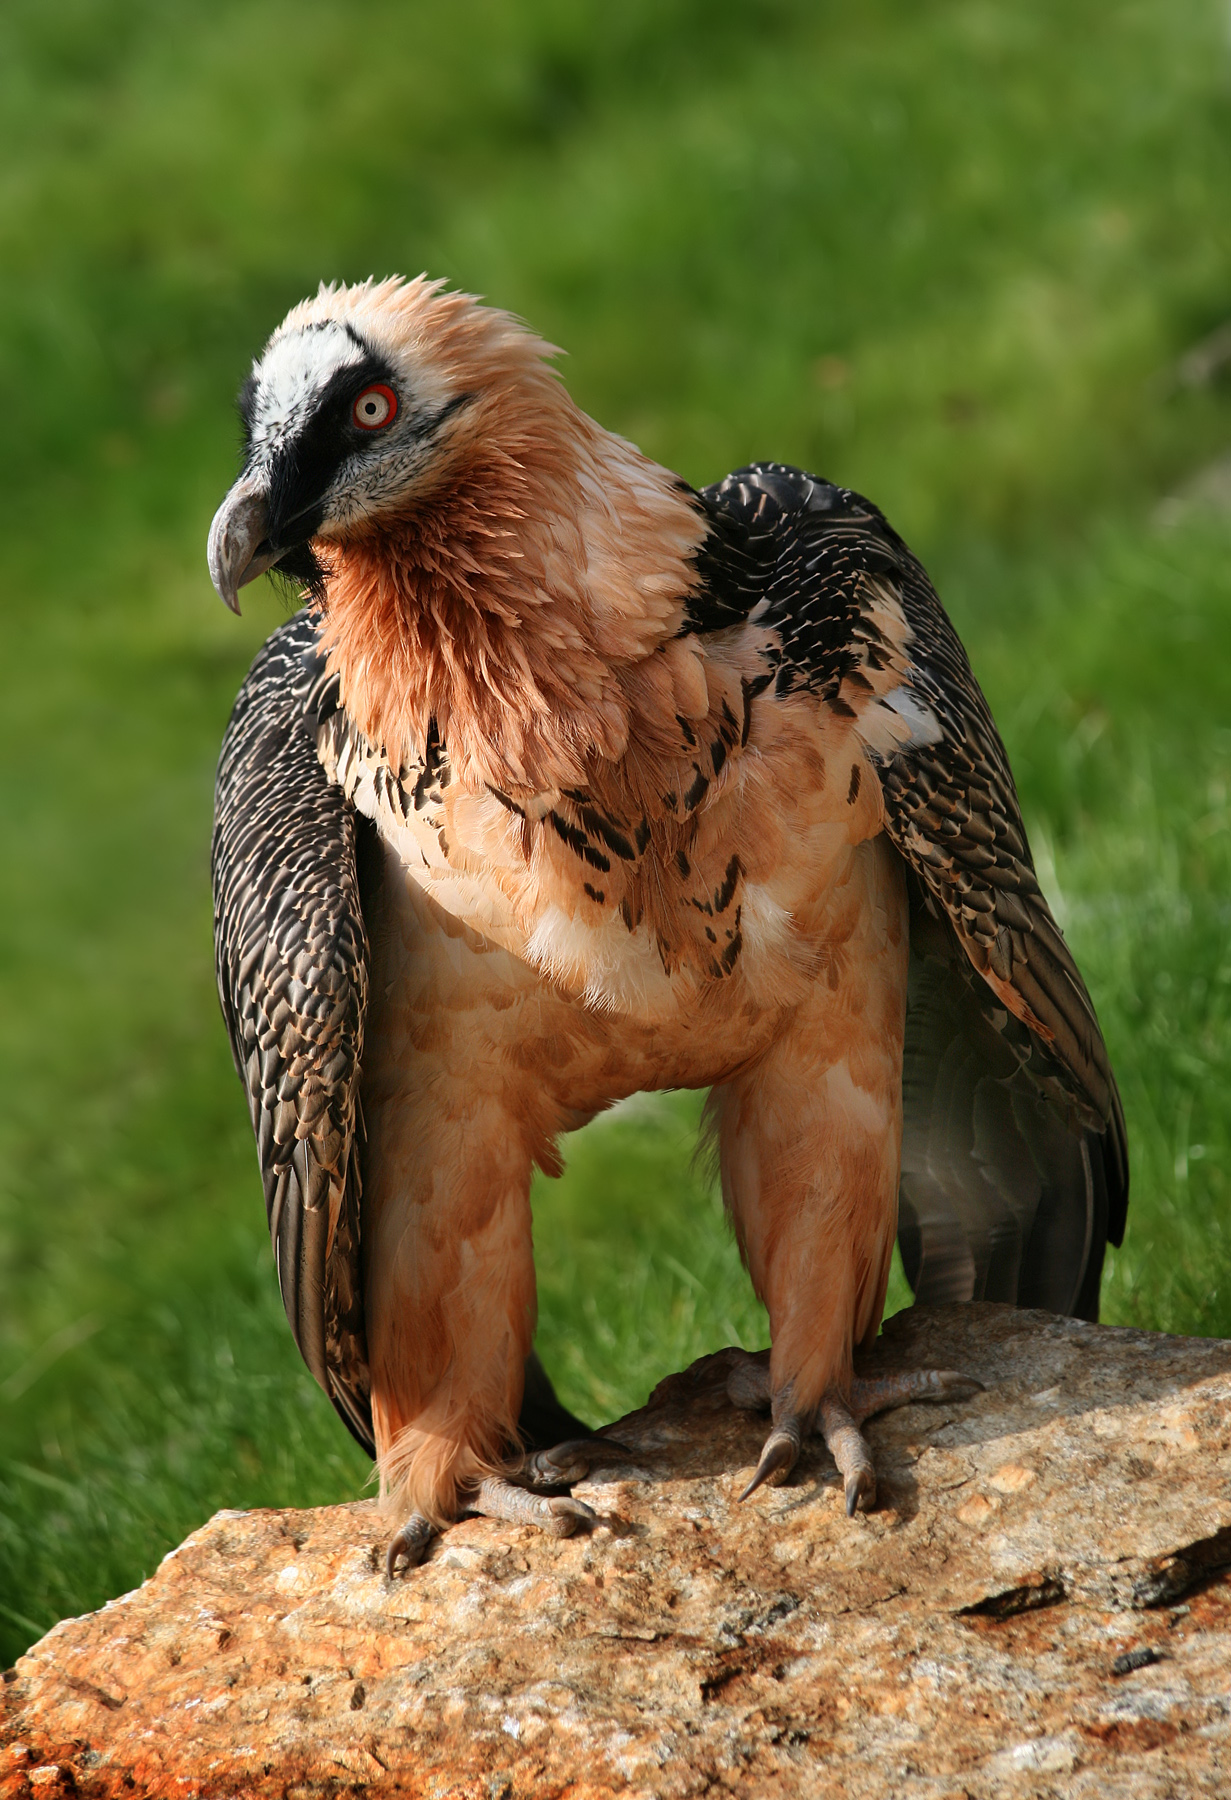 Can vultures eat bones?